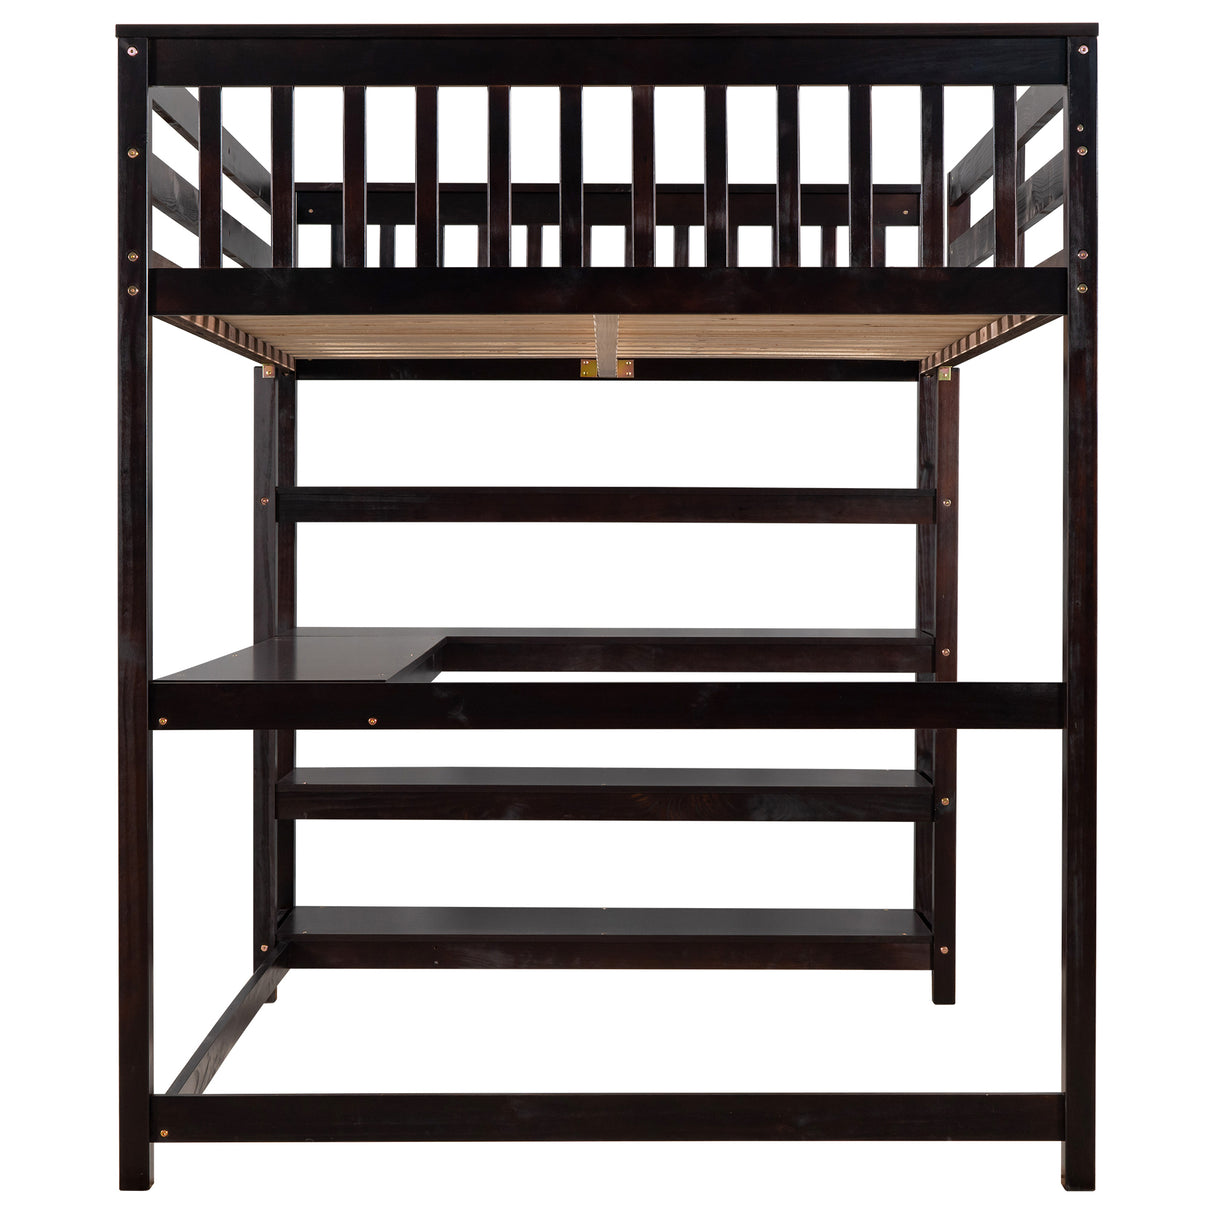 Full Size Loft Bed with Storage Shelves and Under-bed Desk, Espresso(OLD SKU:SM000246AAP-1) - Home Elegance USA